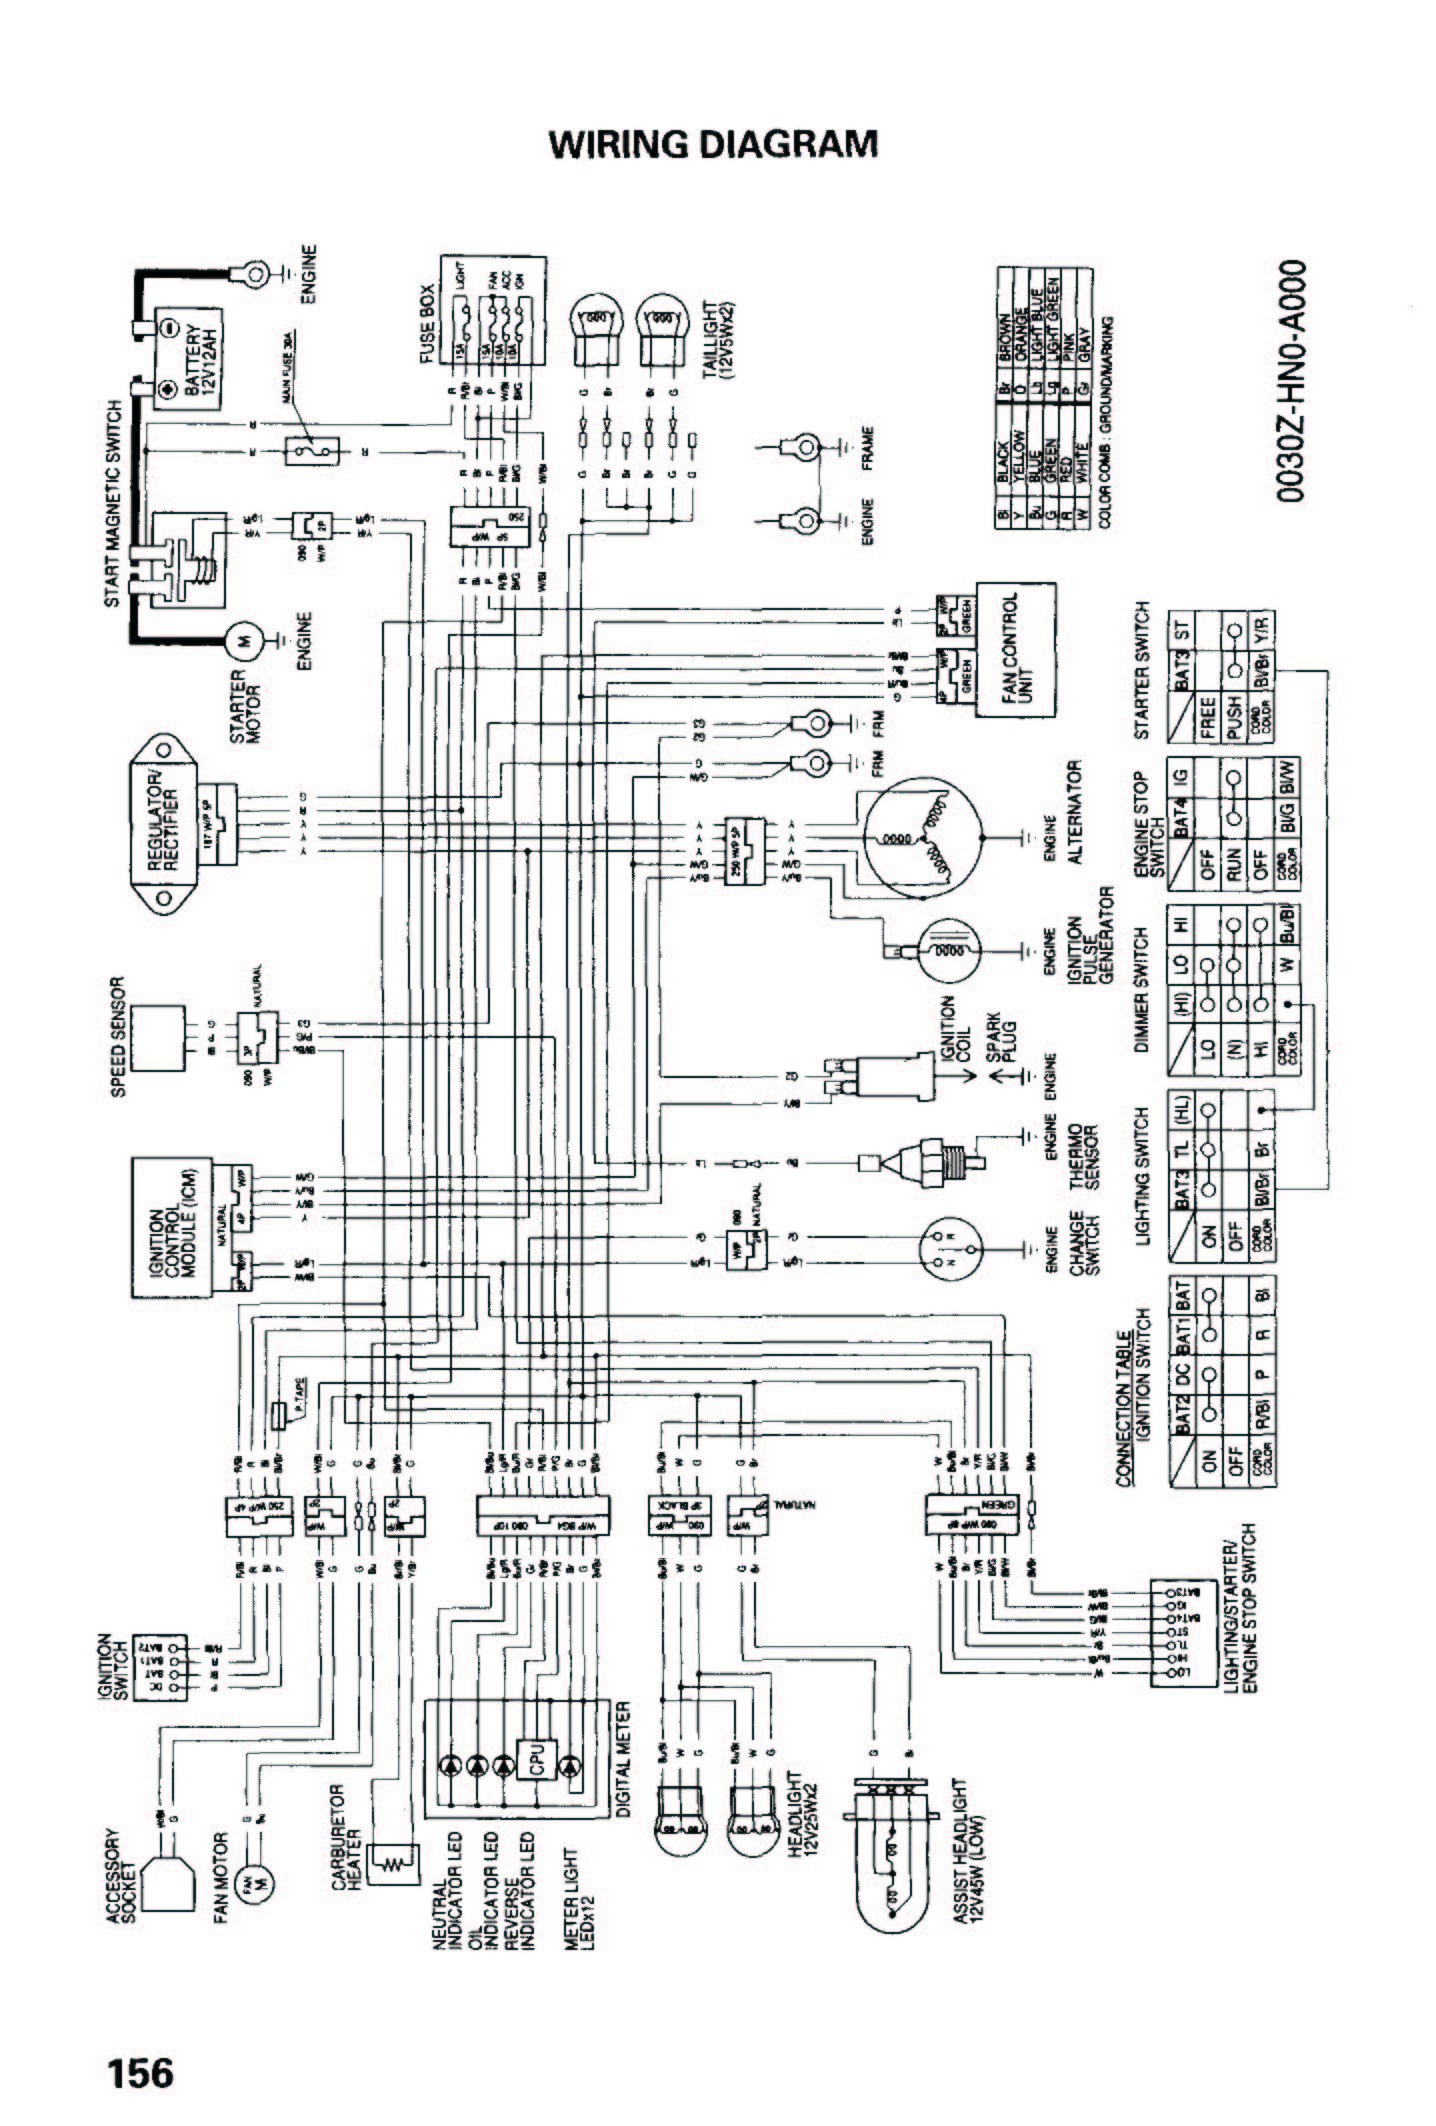 Honda atv Parts Diagram 2001 Honda Rancher 350 Wiring Diagram Of Honda atv Parts Diagram